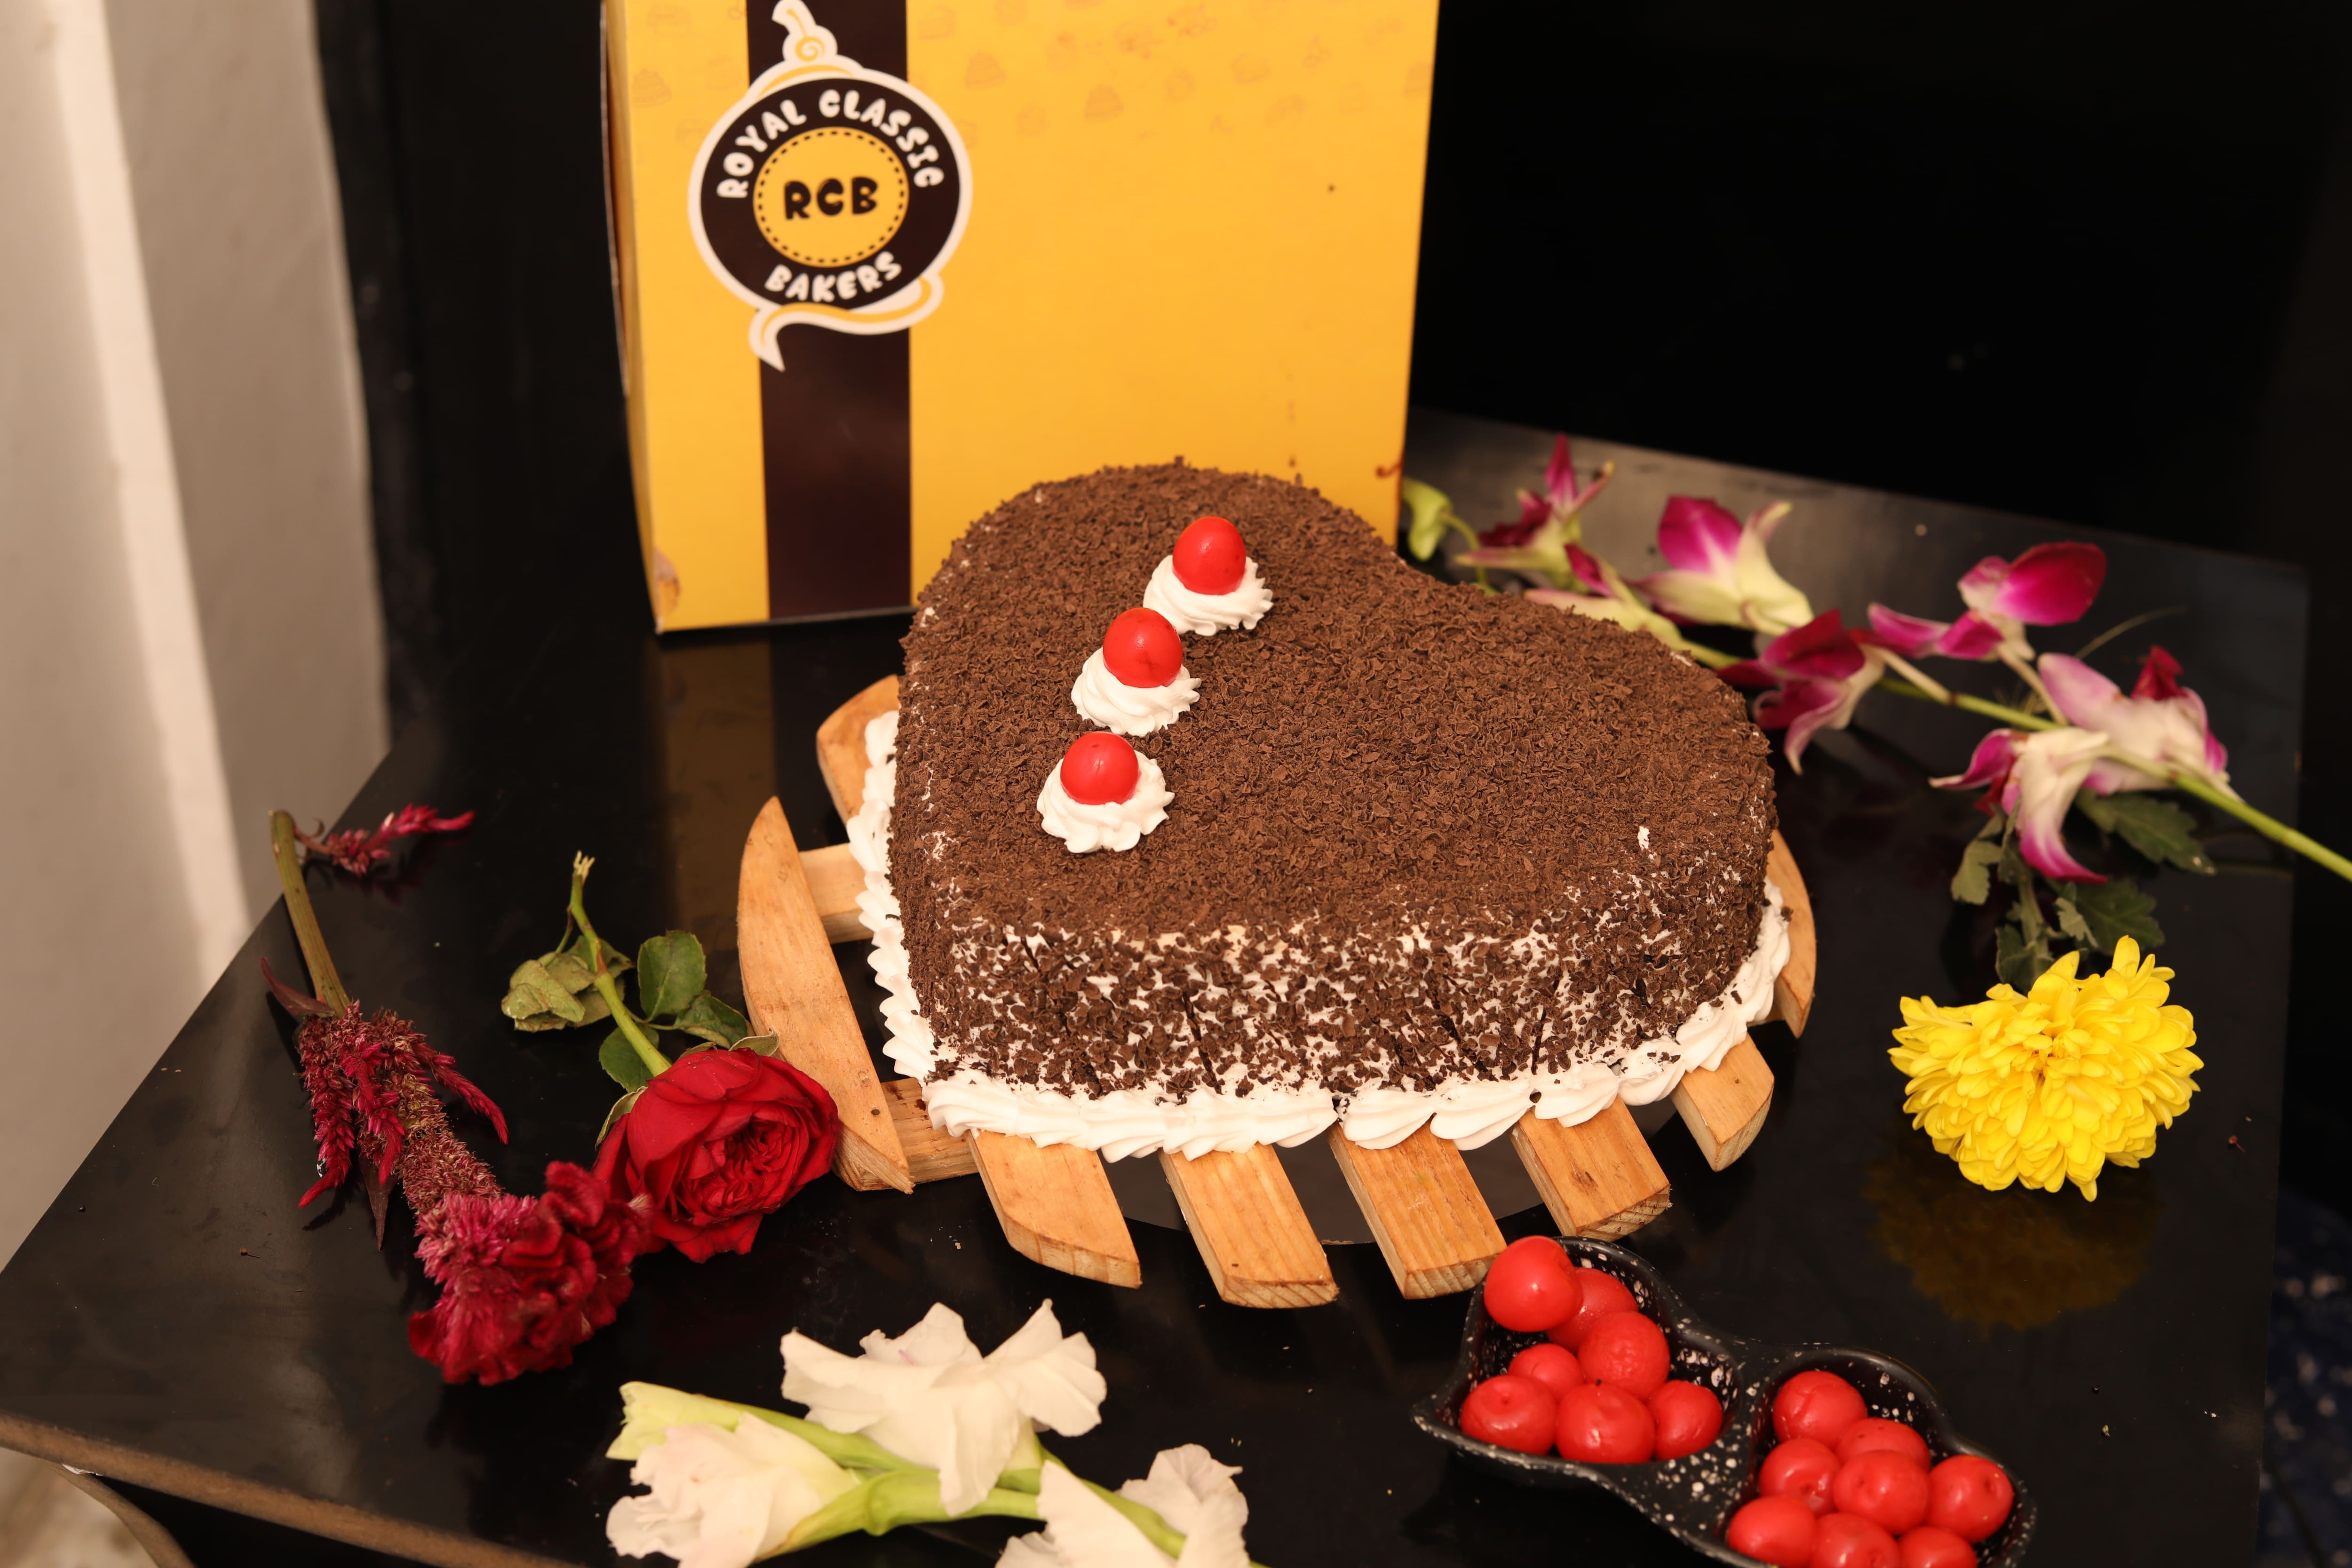 craftybakes_ - RCB! RCB! RCB!!! Cake for a diehard fan of RCB . . #cakeboss  #cakestagram #cakesofinstagram #cakeinspiration #cakeoftheday #cakedecor  #craftybakes #chocolatecake #classicchocolate #whippedcreamcake #sangli  #sanglicakes #sanglikar ...